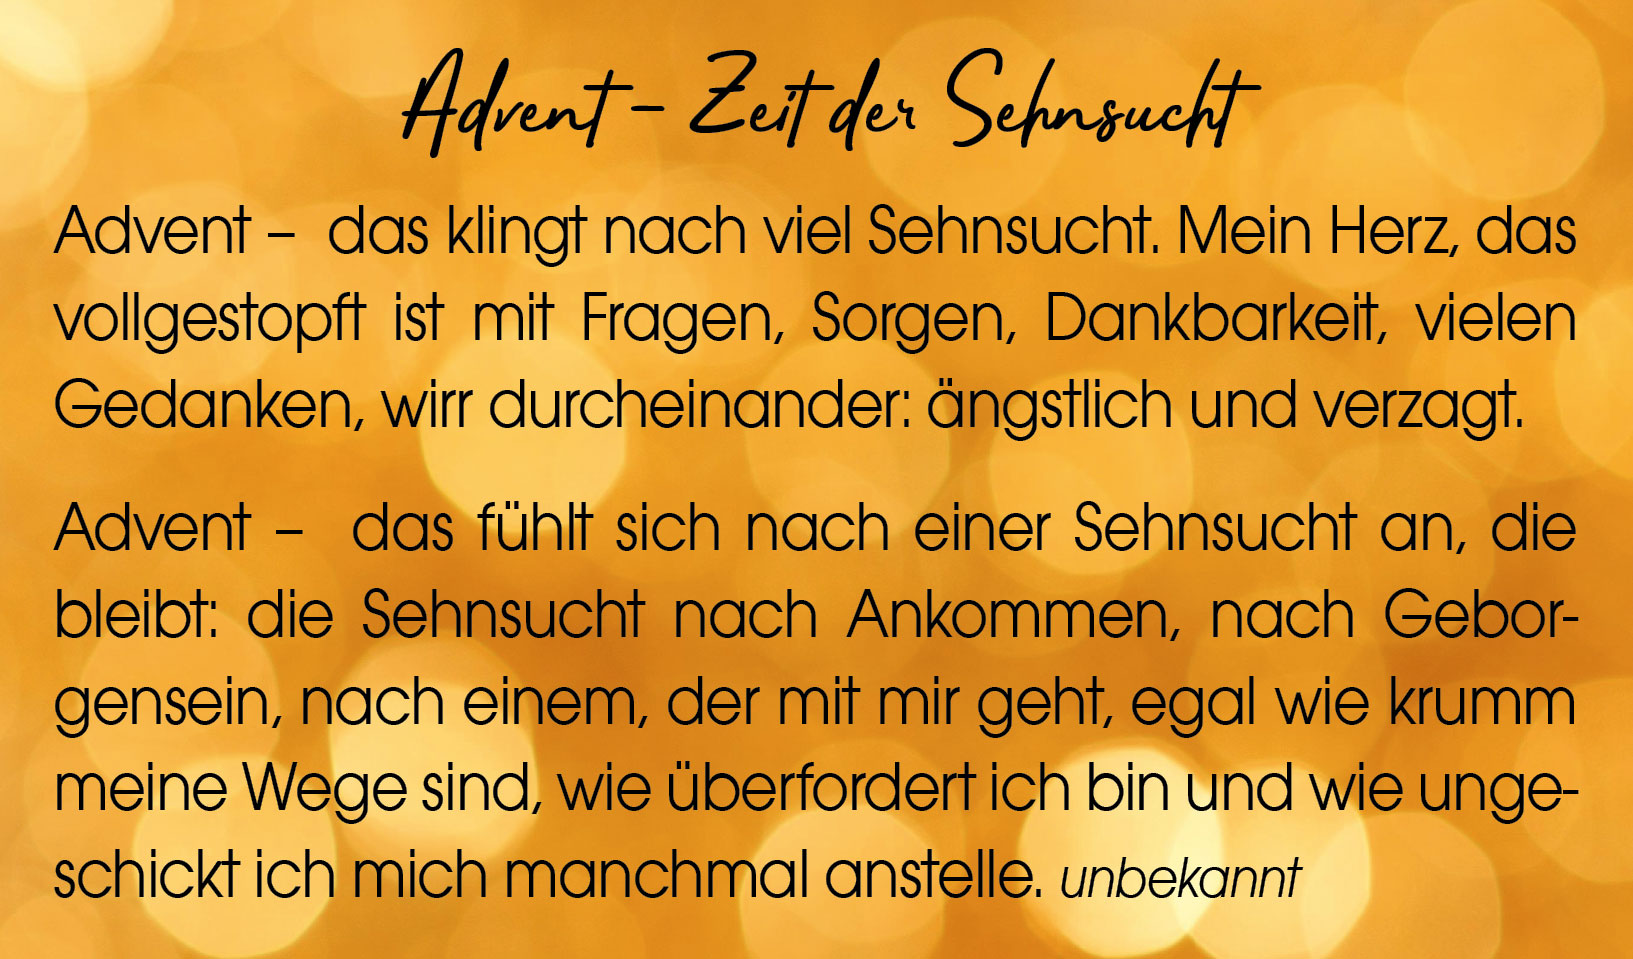 Advent - Zeit der Sehnsucht (Foto: publicdomainpictures, pixabay)